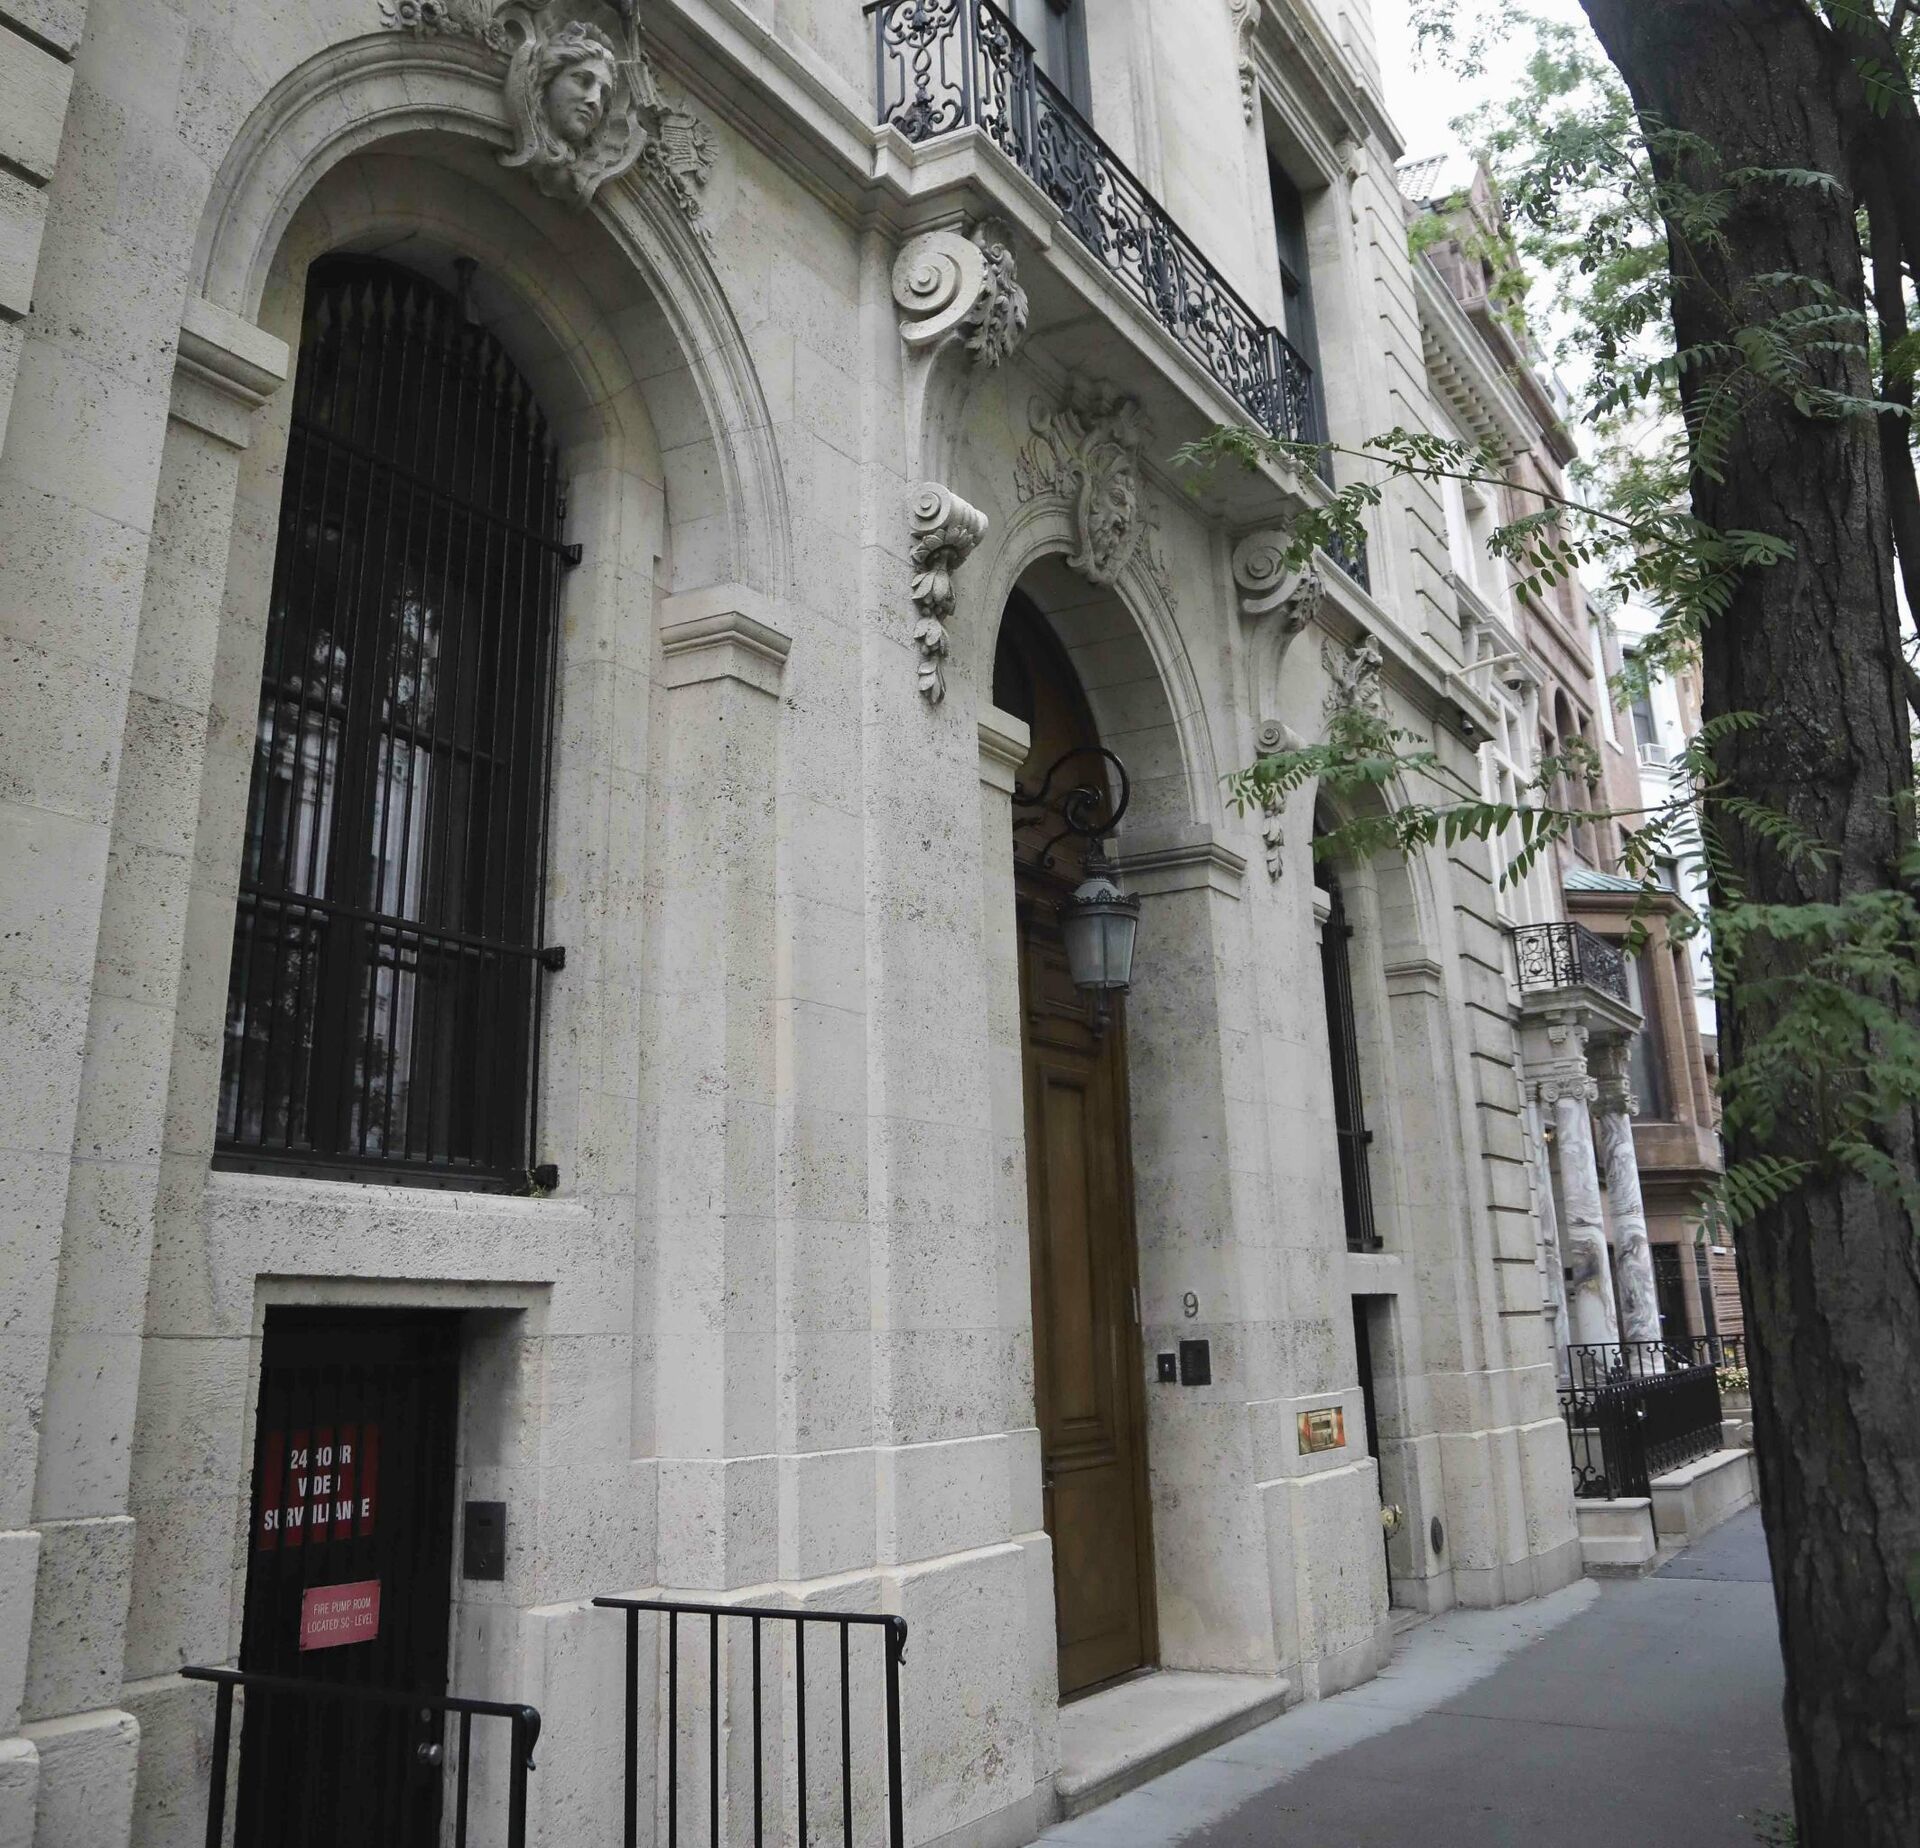 Jeffrey Epstein’s Posh New York Mansion Purchased by Ex-Goldman Sachs Executive - Sputnik International, 1920, 17.03.2021